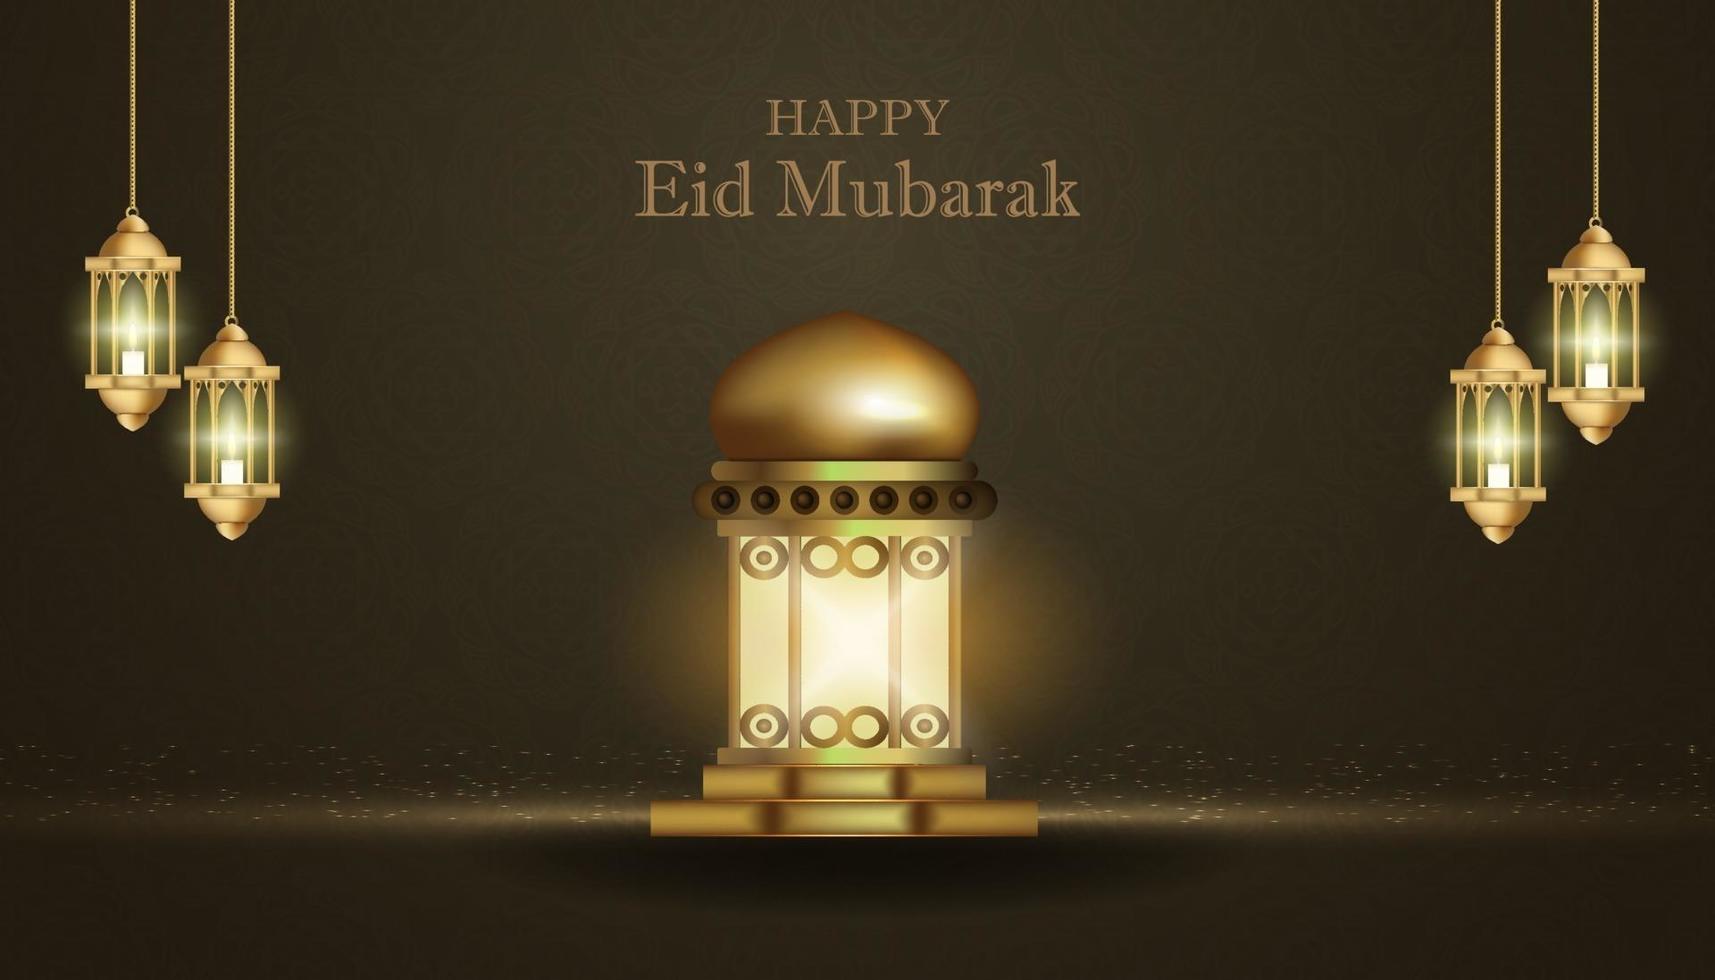 Eid mubarak islamic background vector